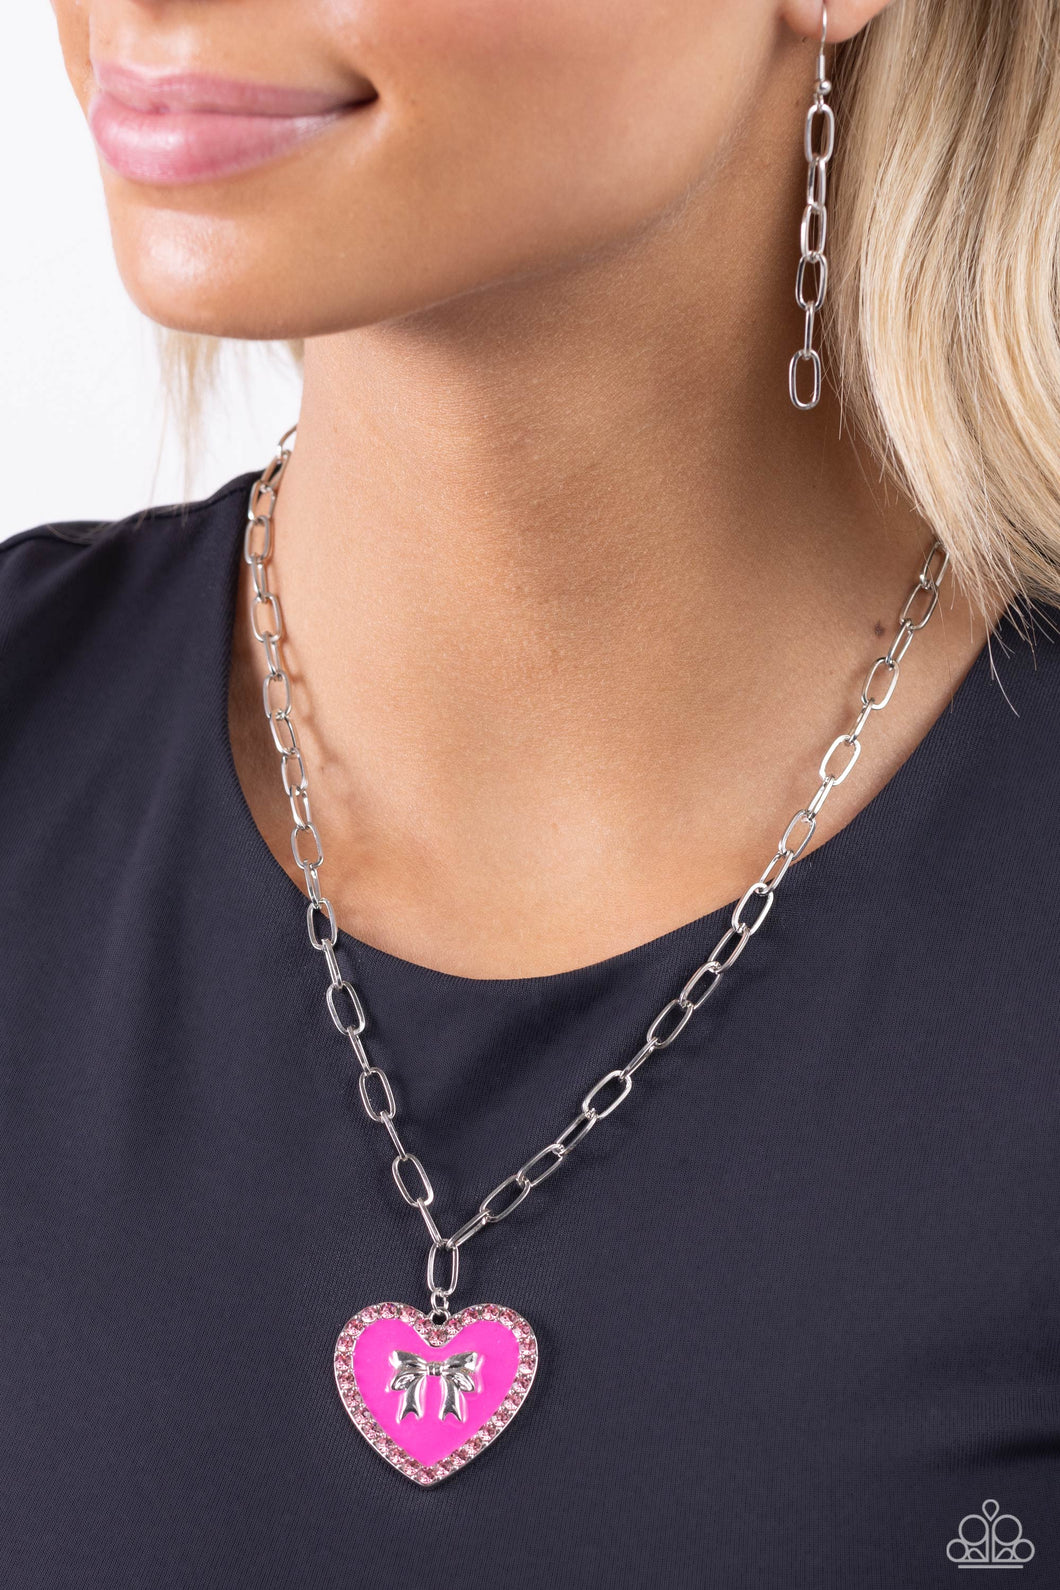 Paparazzi “Romantic Gesture” Pink Necklace Earring Set